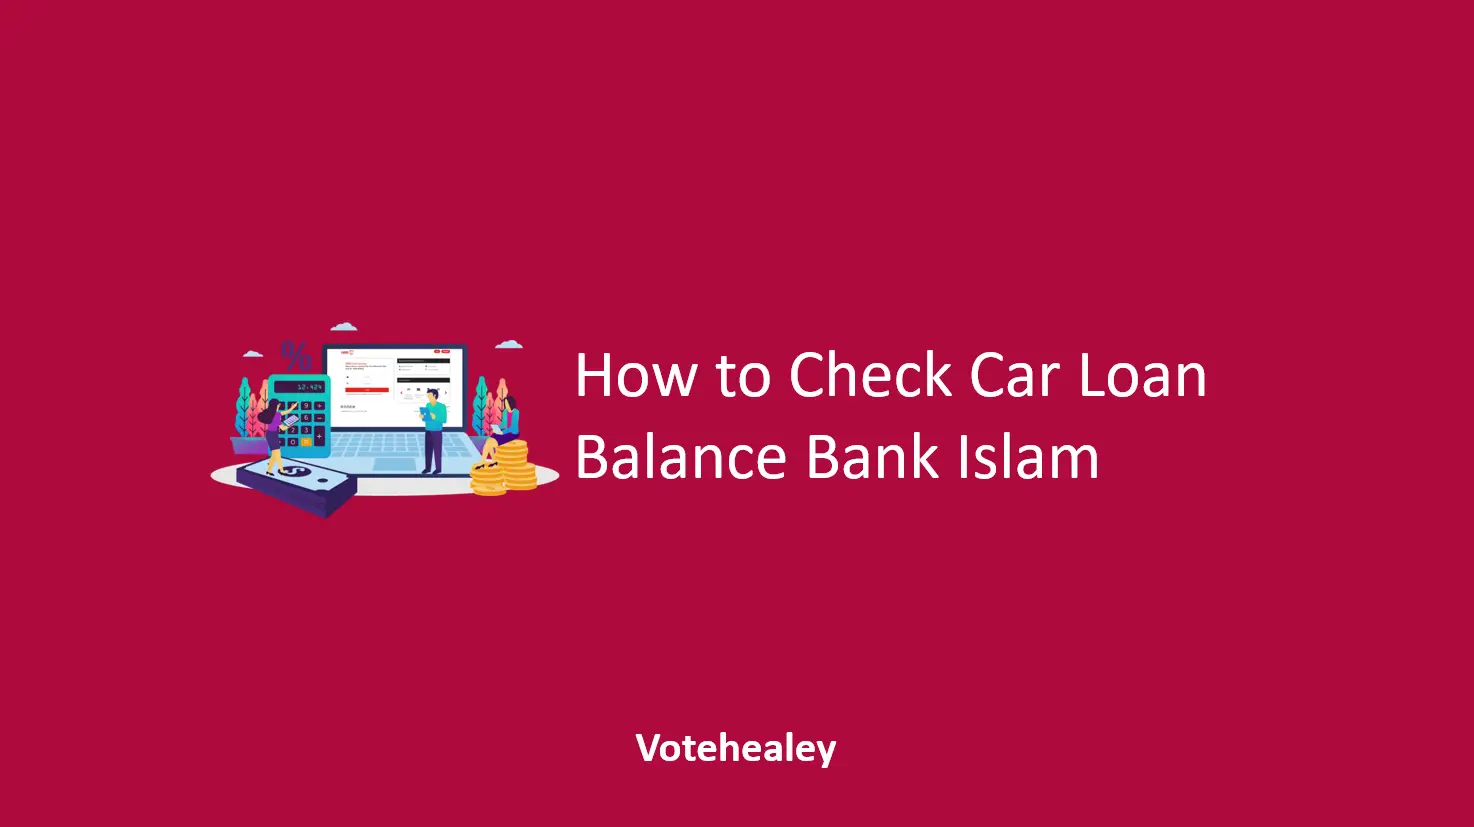  How to Check Car Loan Balance Bank Islam Online